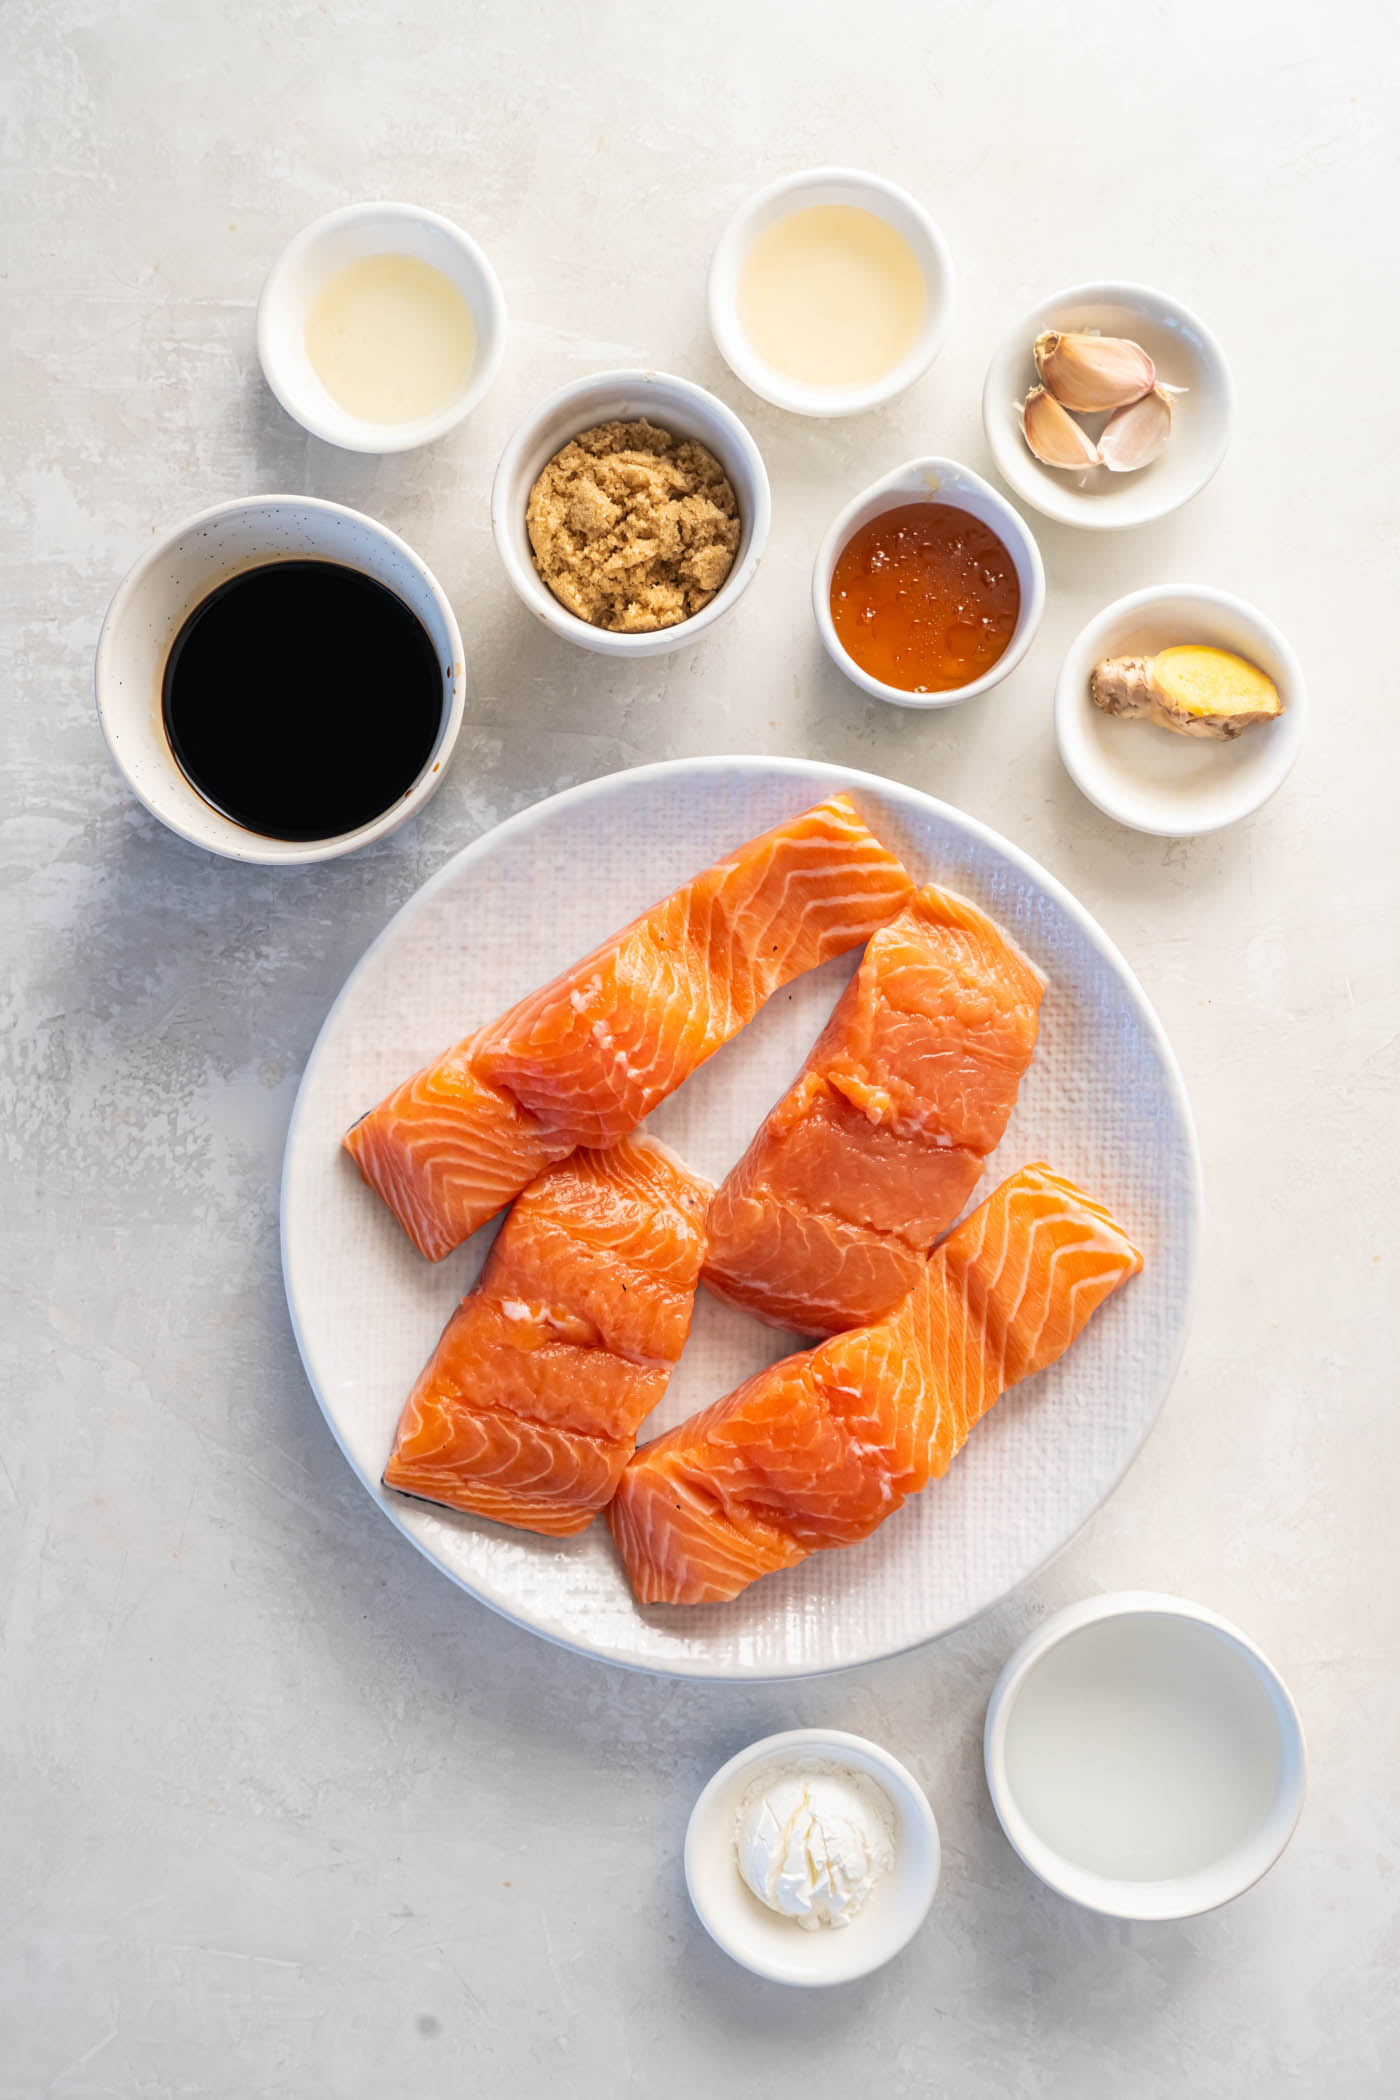 Ingredients for teriyaki salmon recipe.